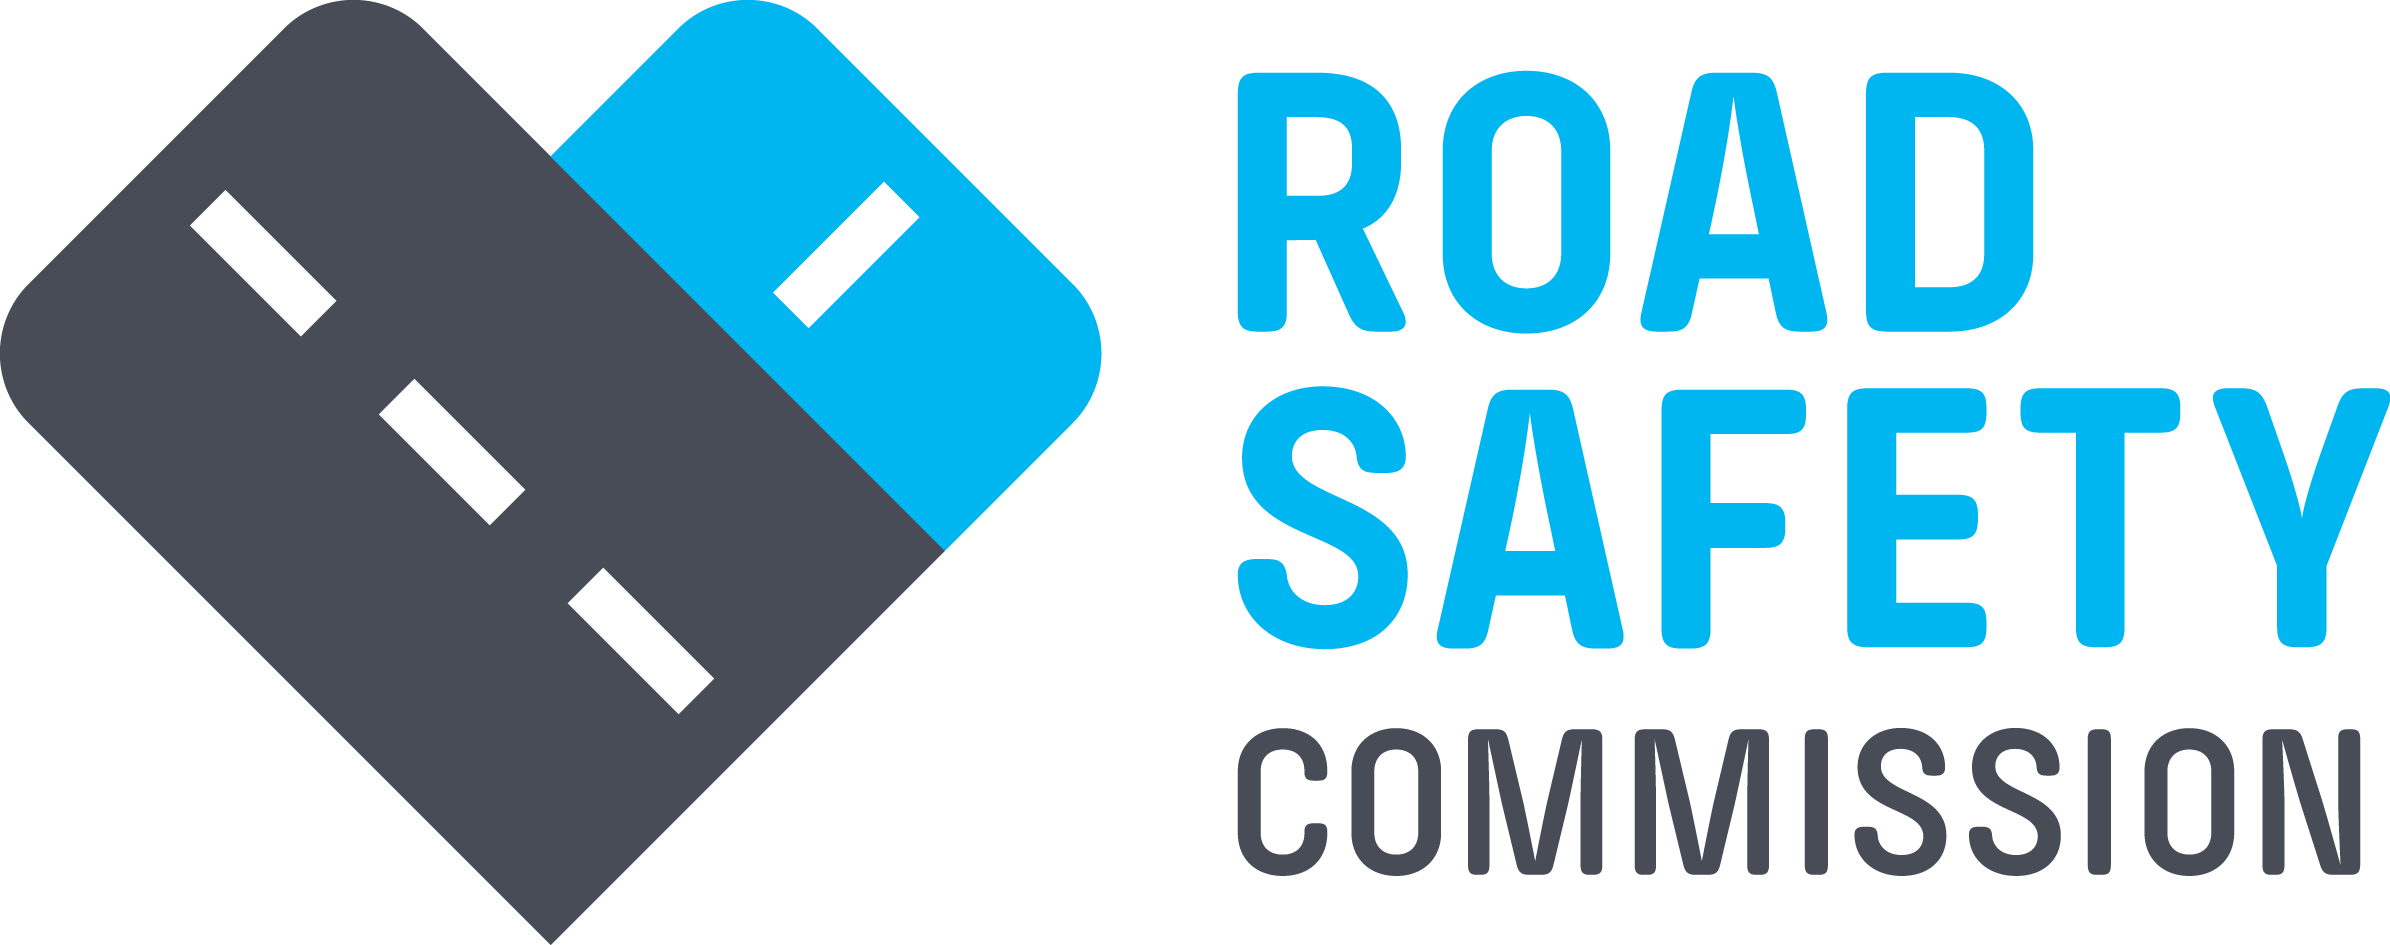 Road Safety Commission WA Logo